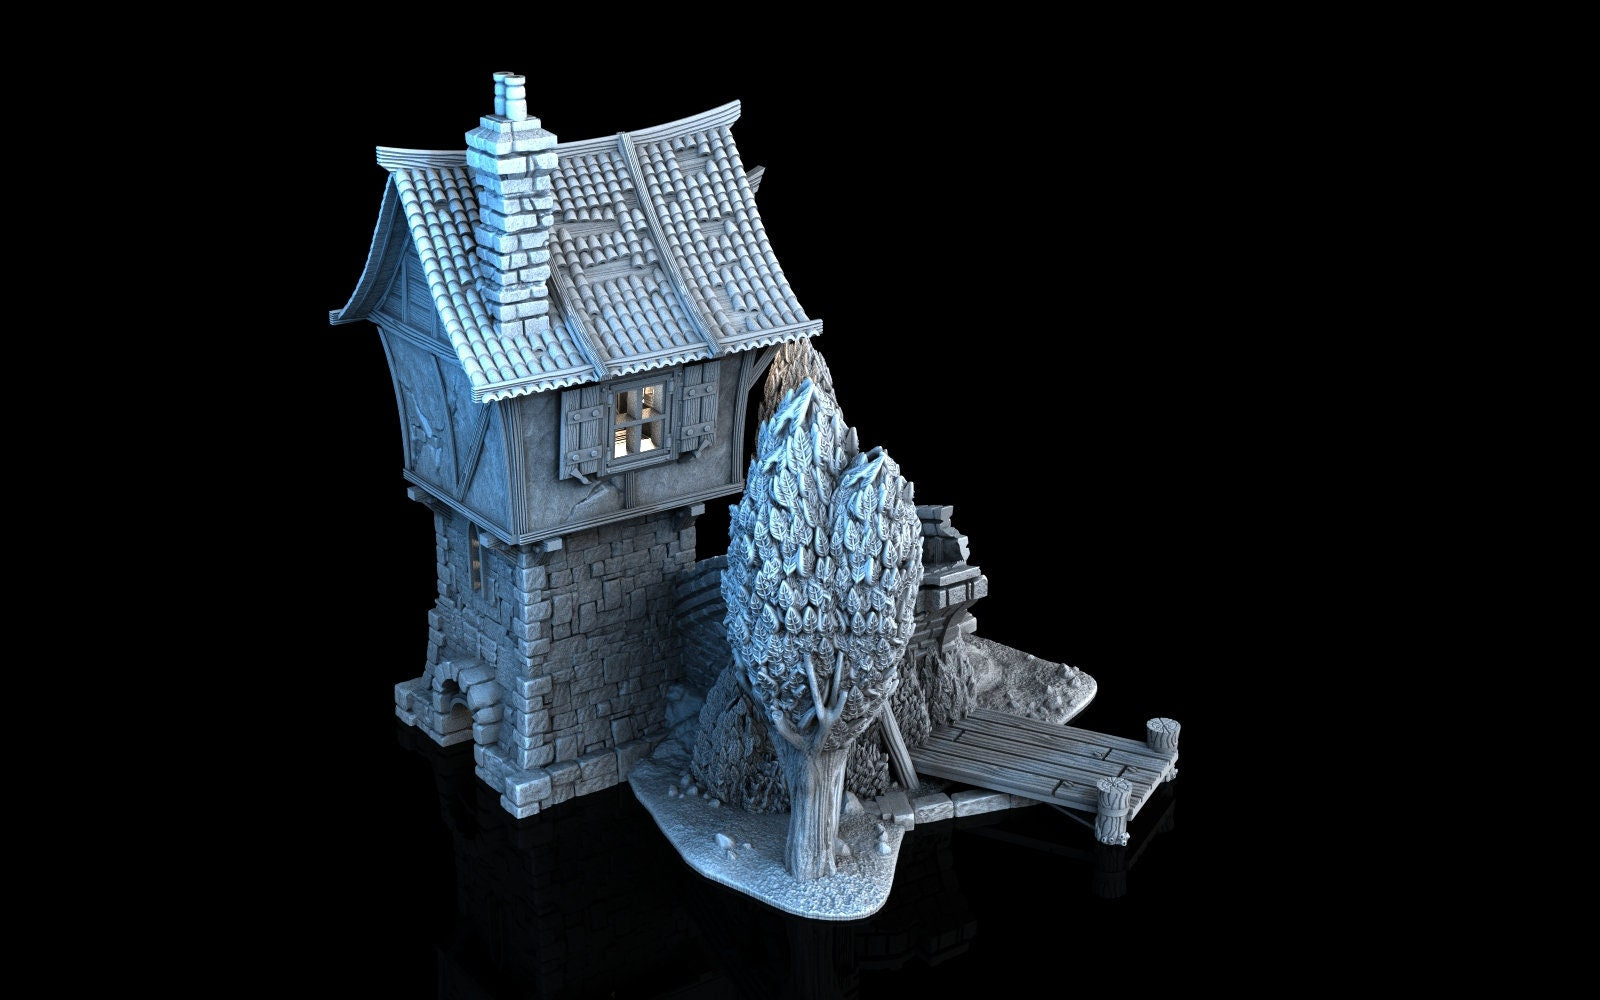 Broken Bridge Tower - 3DP4U Medieval Town | Miniature | Wargaming | Roleplaying Games | 32mm | Gate house | Playable | Filament | 3d printed